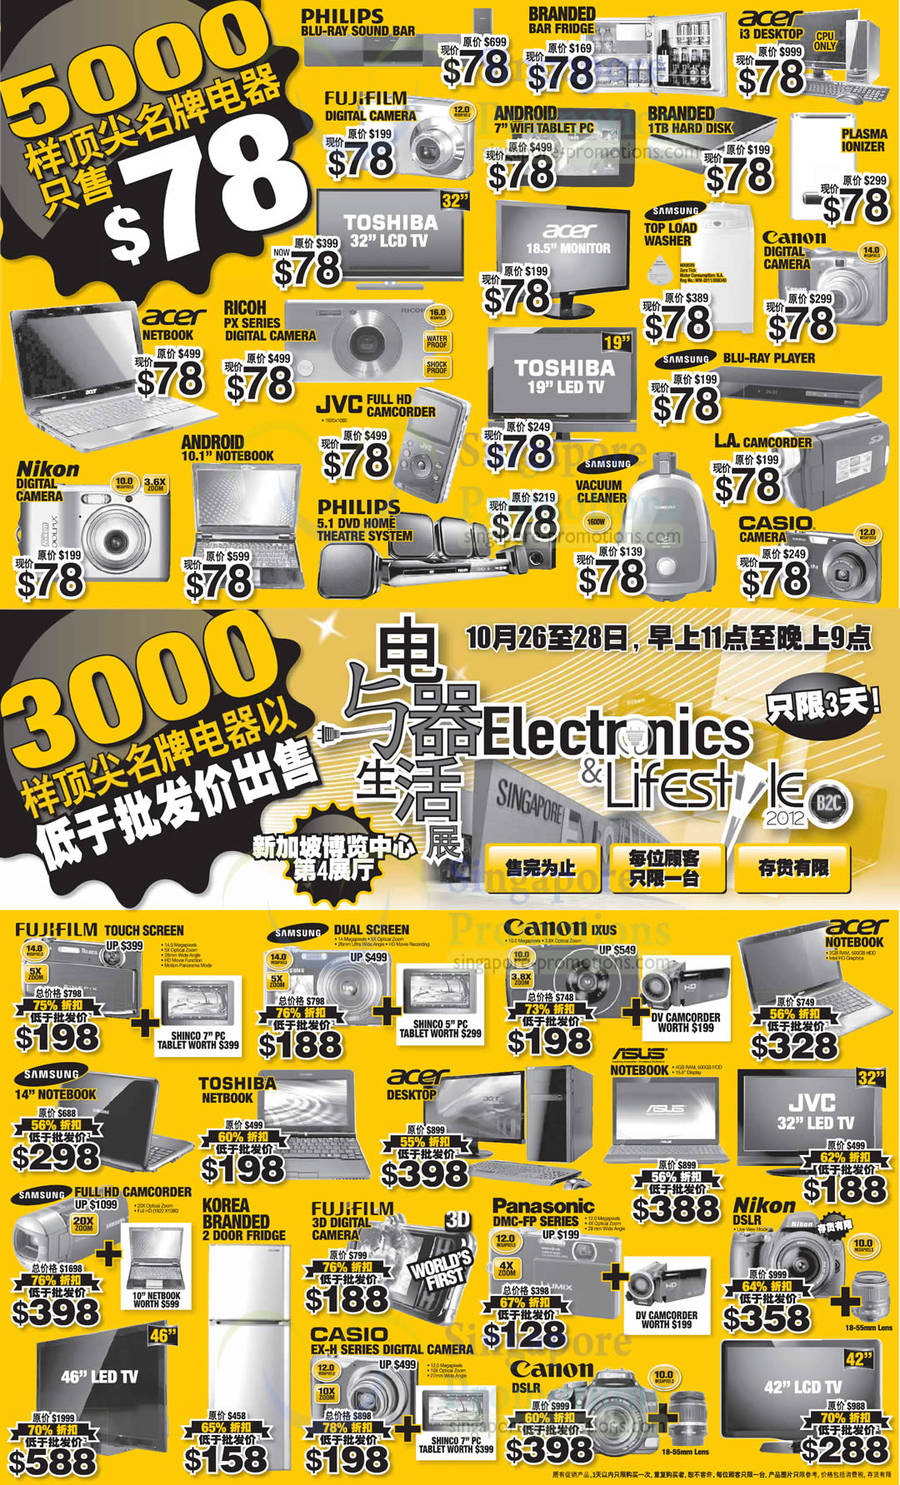 25 Oct 78 Dollar Deals, 3000 Deals, LCD TVs, LED TVs, Monitors, Notebooks, Digital Cameras, Blu-Ray Player